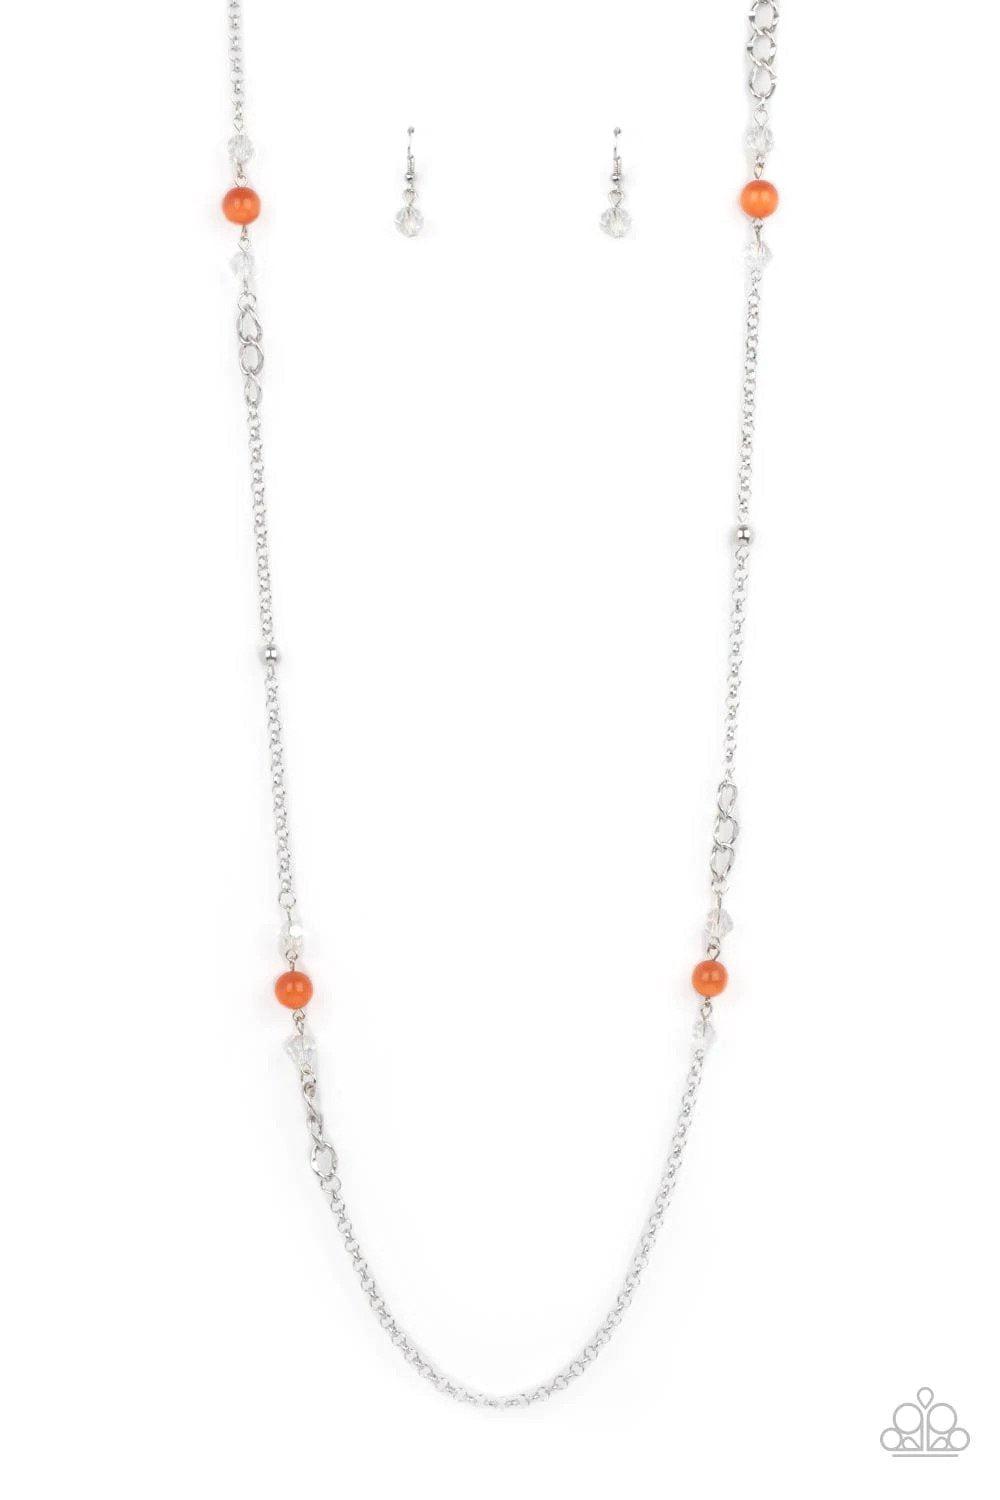 Teasingly Trendy Orange Necklace - Paparazzi Accessories- lightbox - CarasShop.com - $5 Jewelry by Cara Jewels